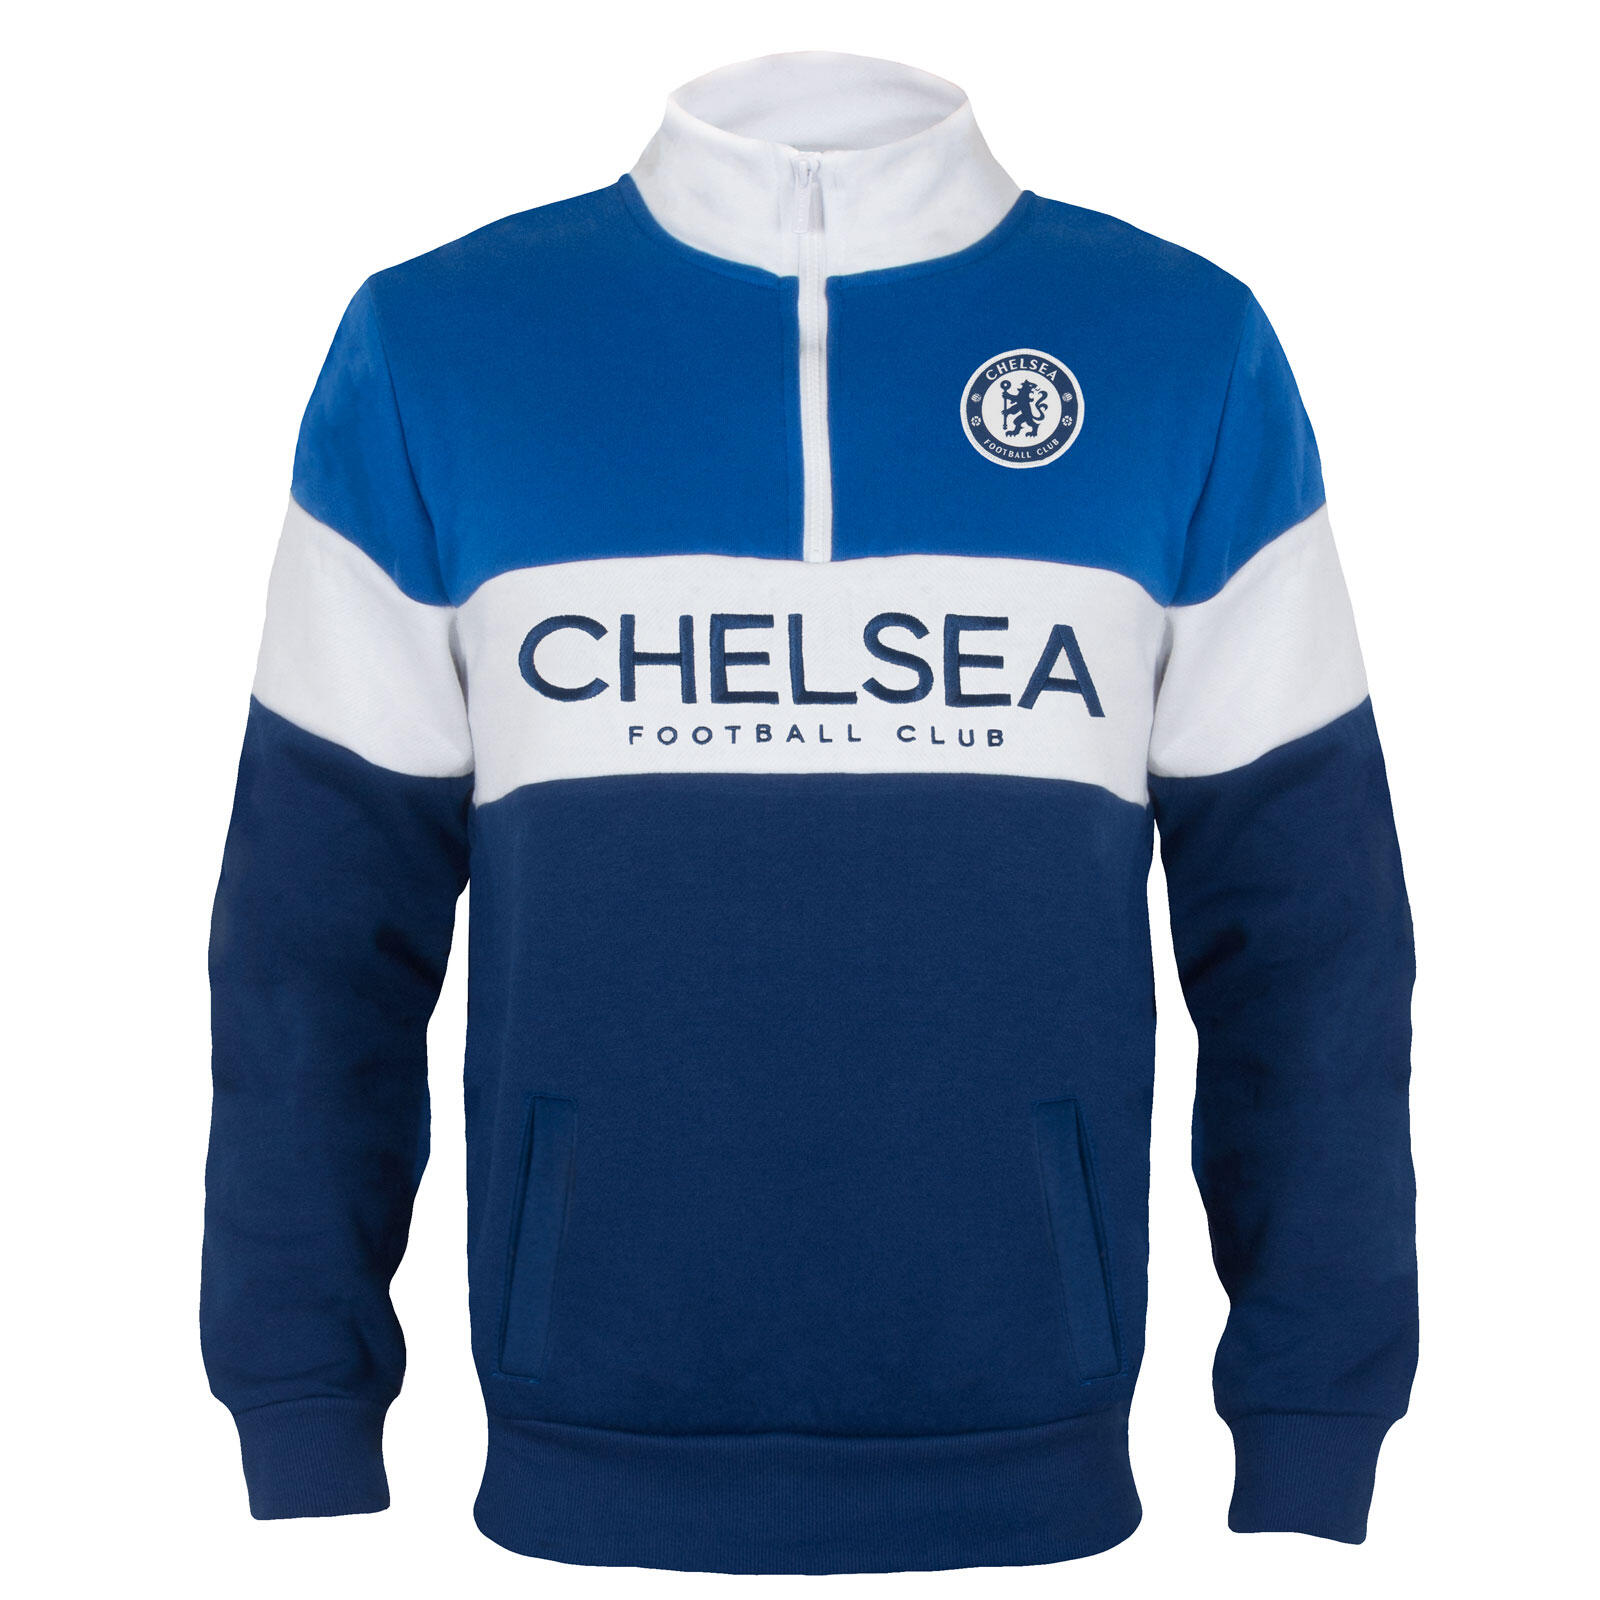 CHELSEA Chelsea FC Boys Sweatshirt Top Kids Quarter Zip Blue OFFICIAL Football Gift